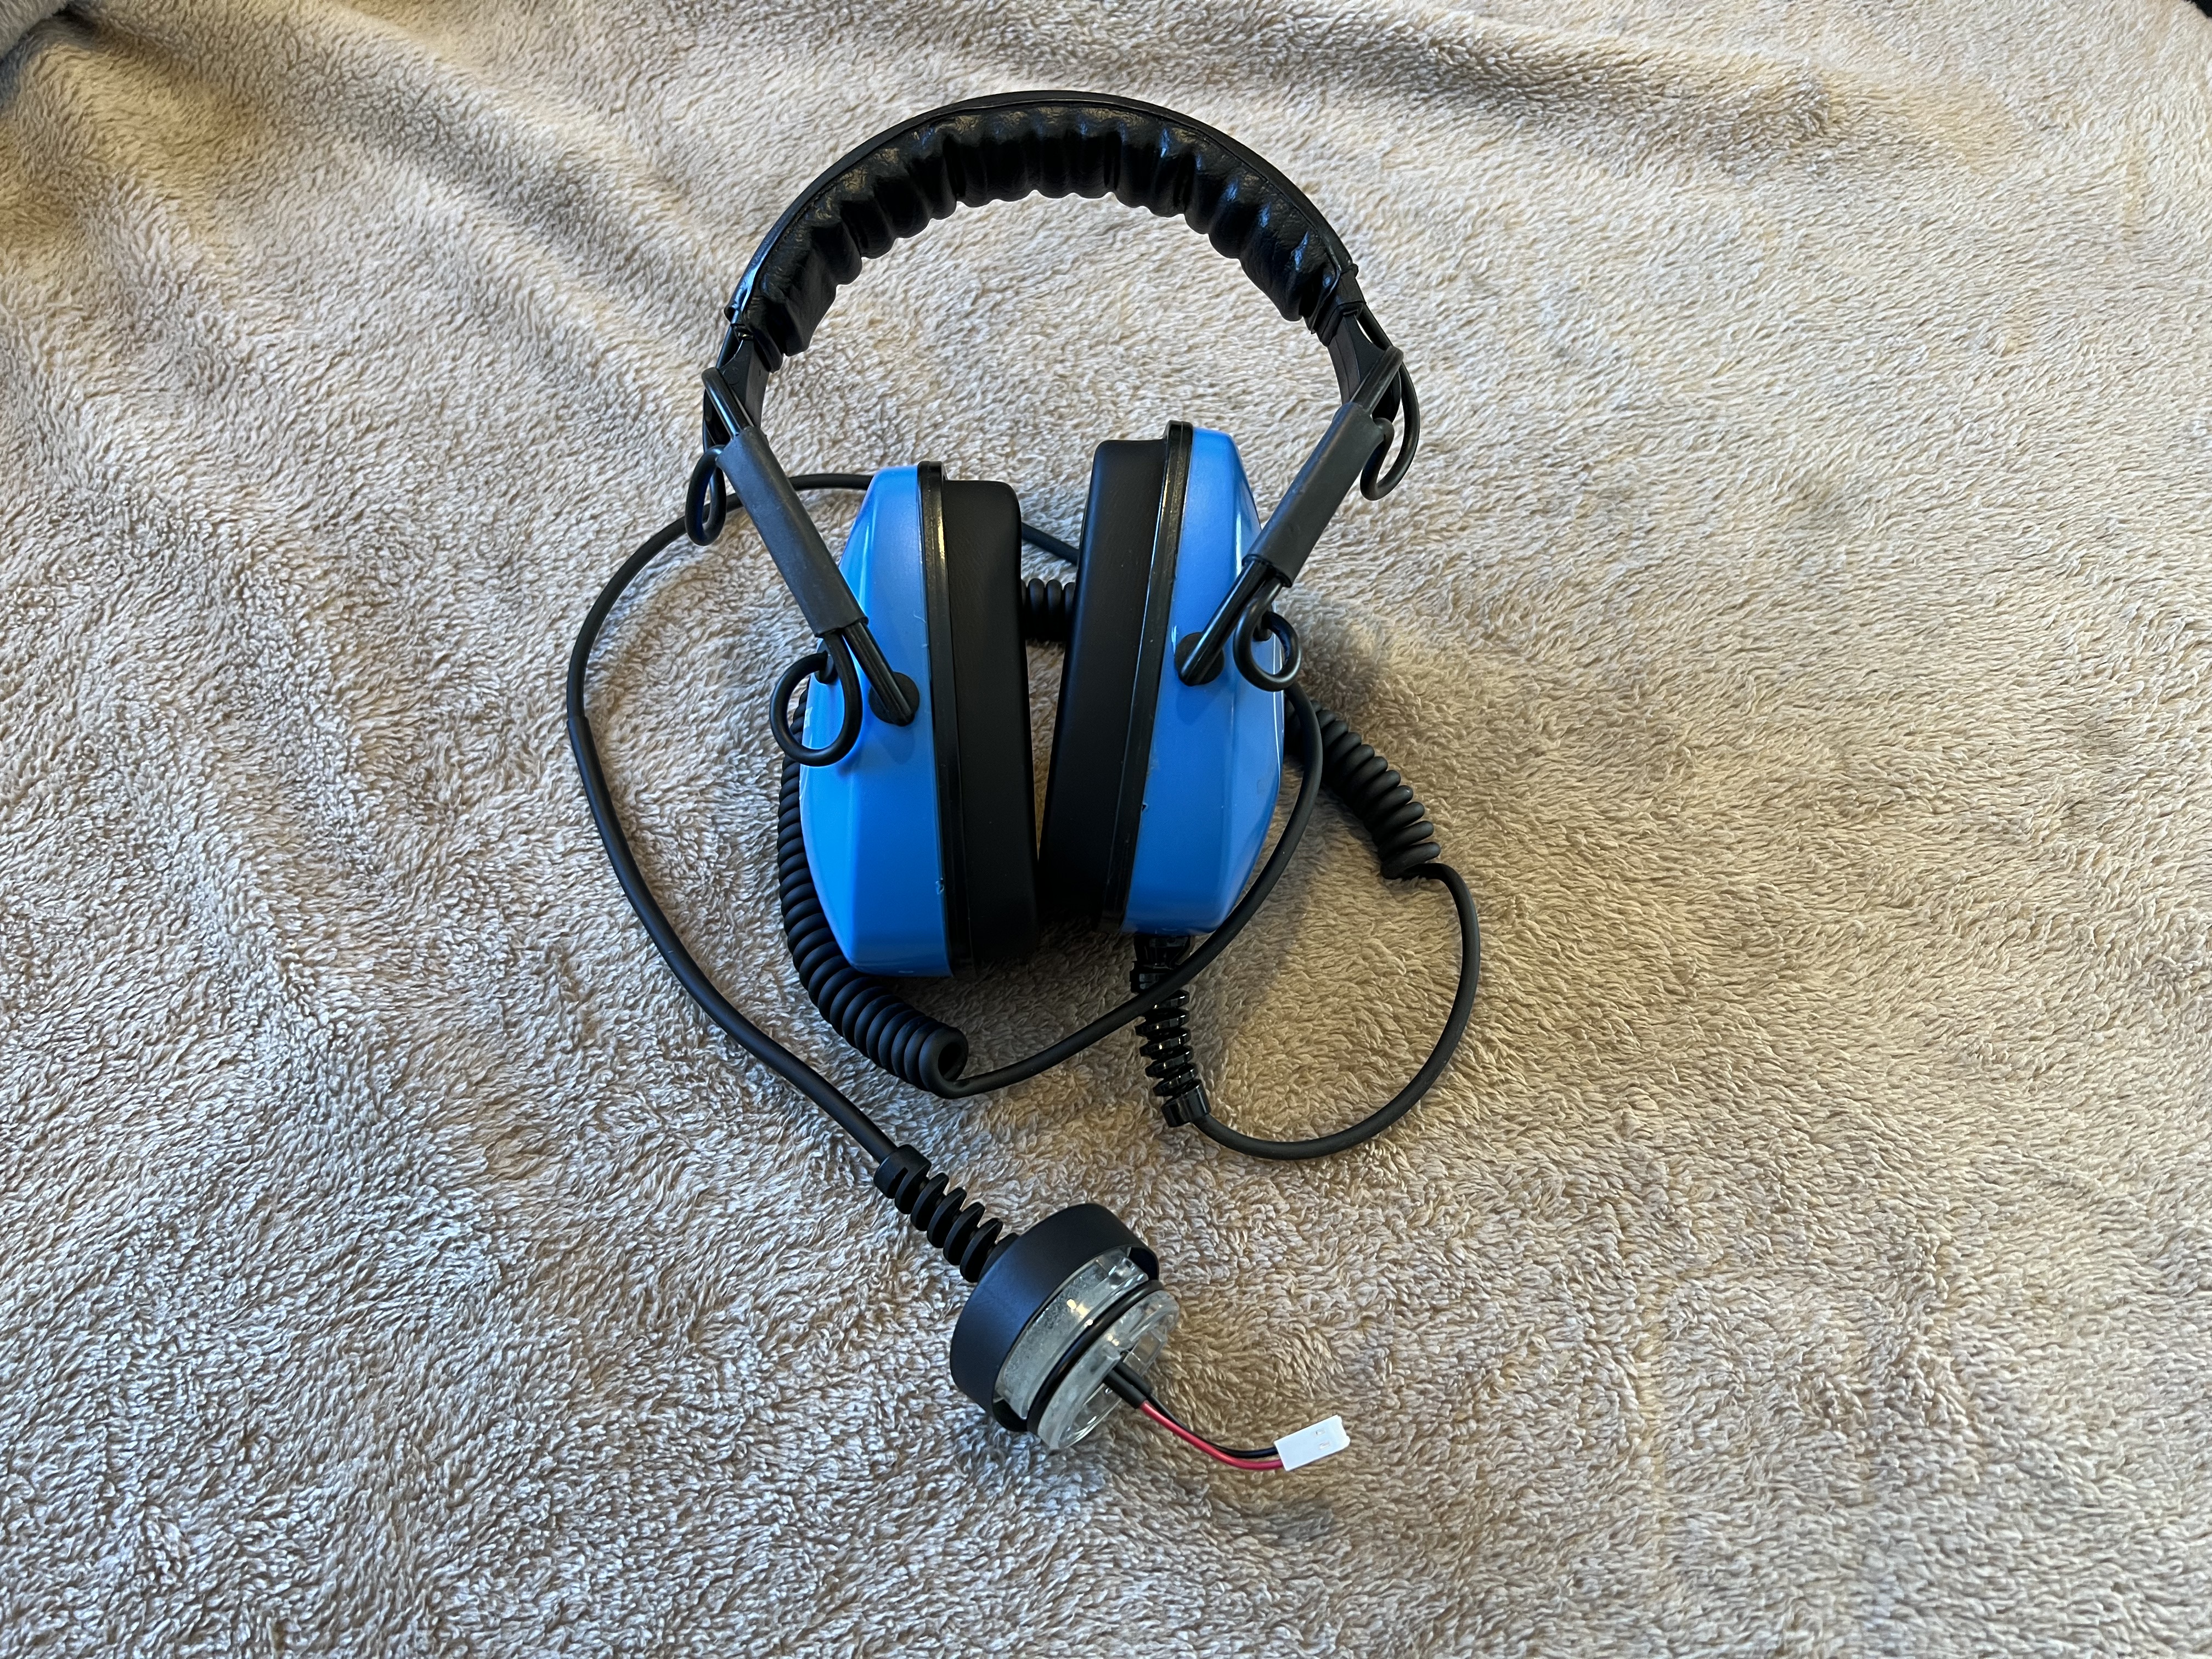 Aqua-Tek Submersible Headphones for the Minelab Excalibur